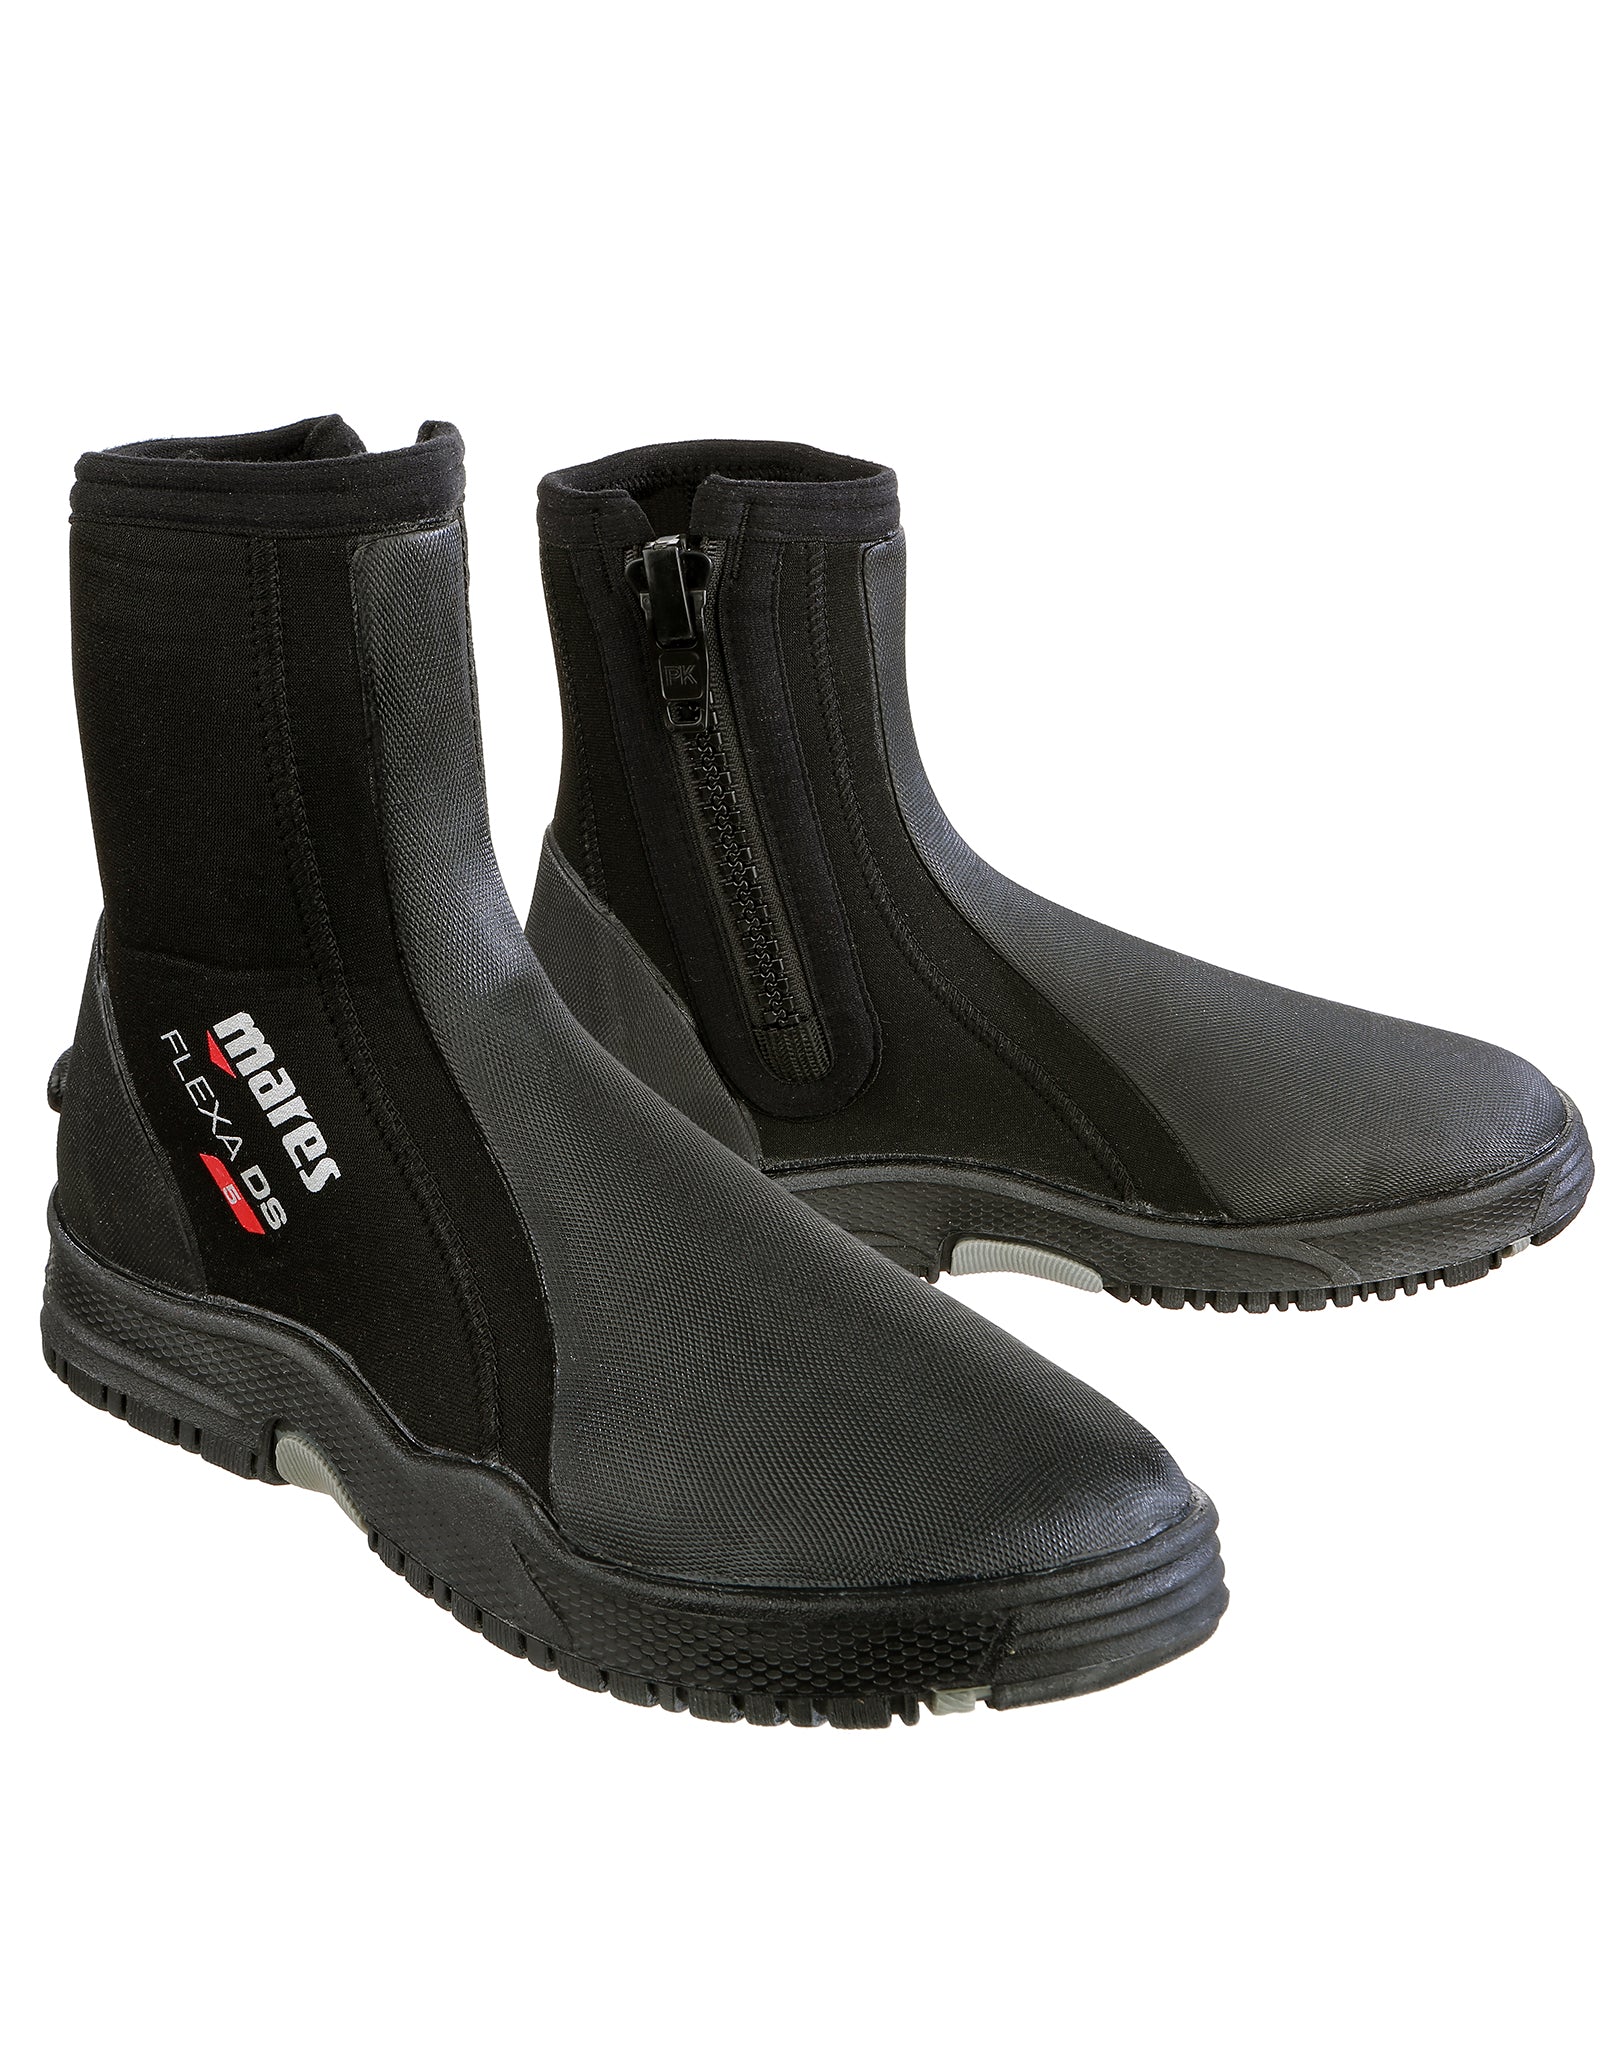 Mares Flexa DS 5mm Boots | Simply Scuba UK